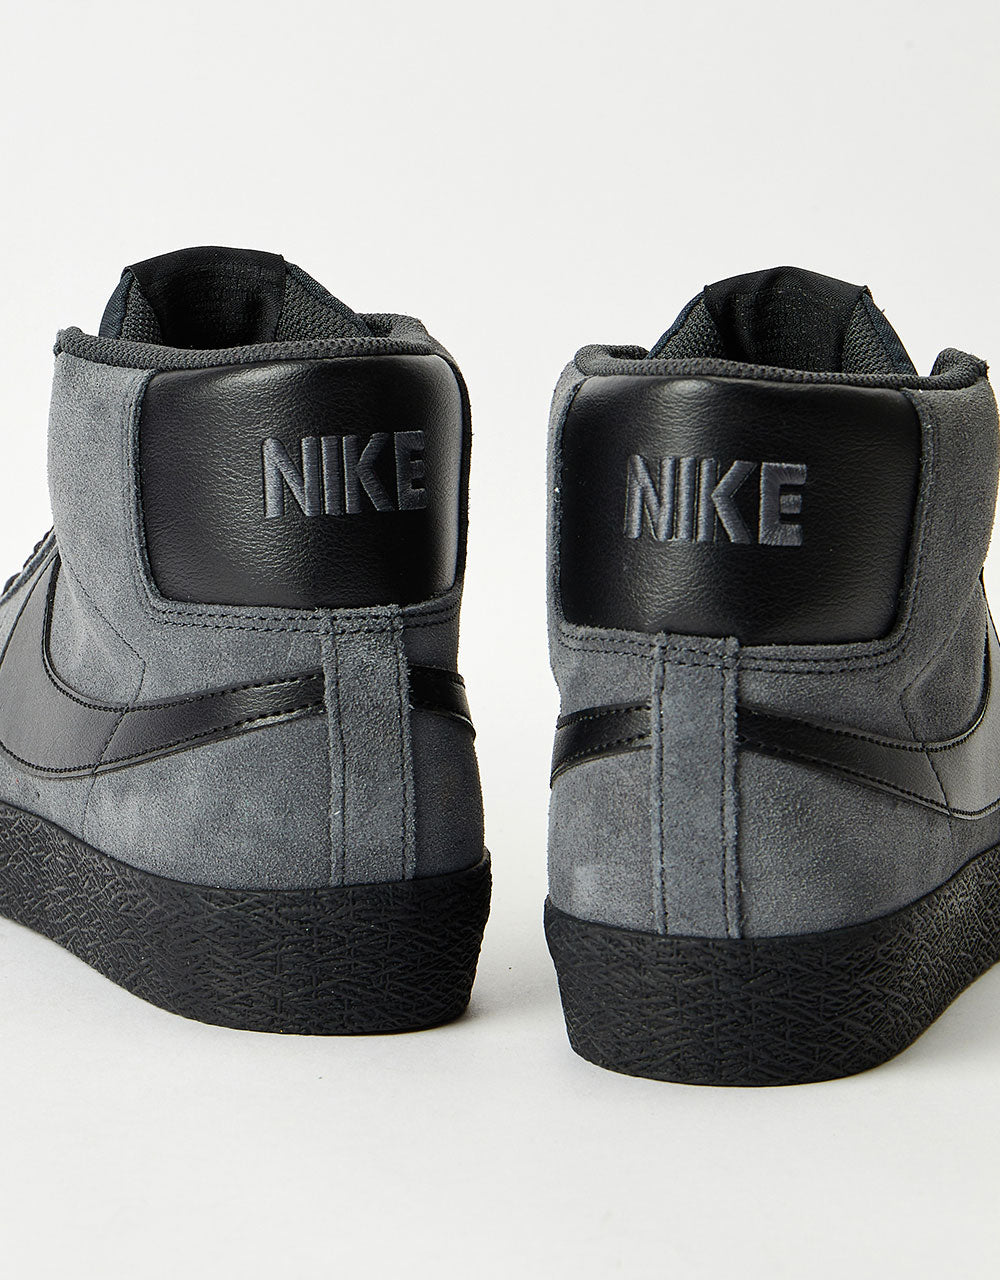 Nike SB Zoom Blazer Mid Skate Shoes - Anthracite/Black-Anthracite-Black-Gum Lt Brown